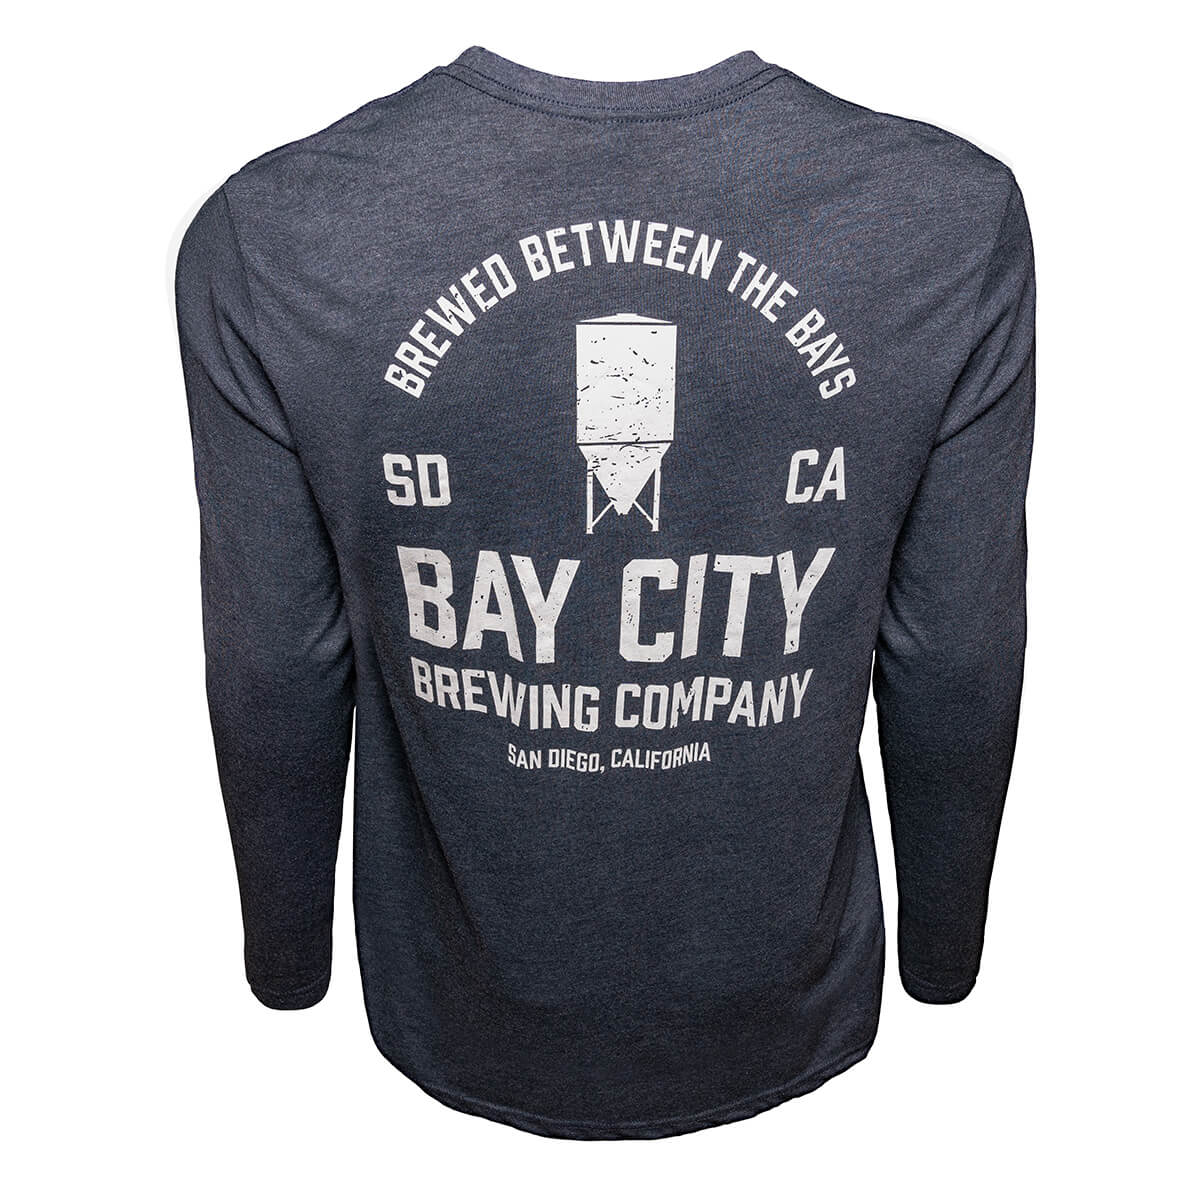 Bay City Long Sleeve - Men's Shirt - Craft Beer T Shirt